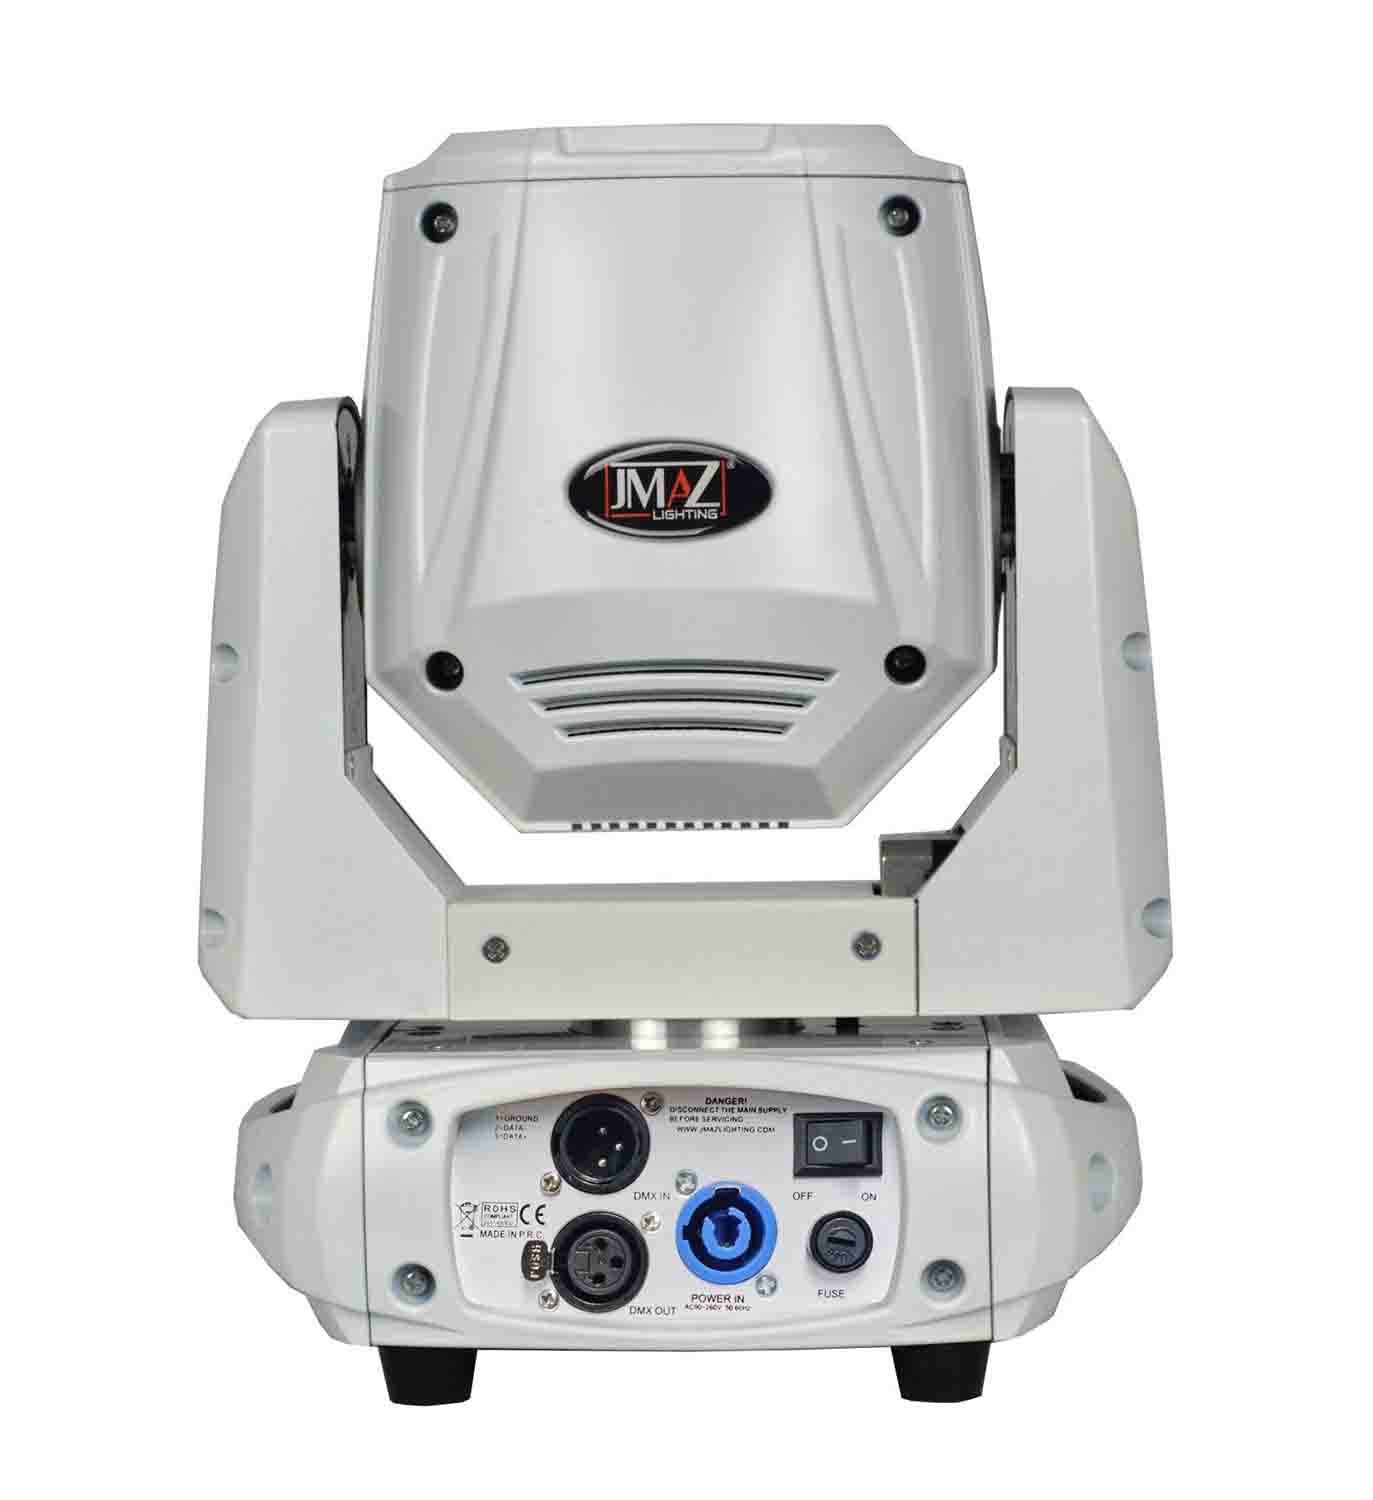 B-Stock: JMAZ Attco Spot 100, 75W LED Moving Head Spot - White by JMAZ